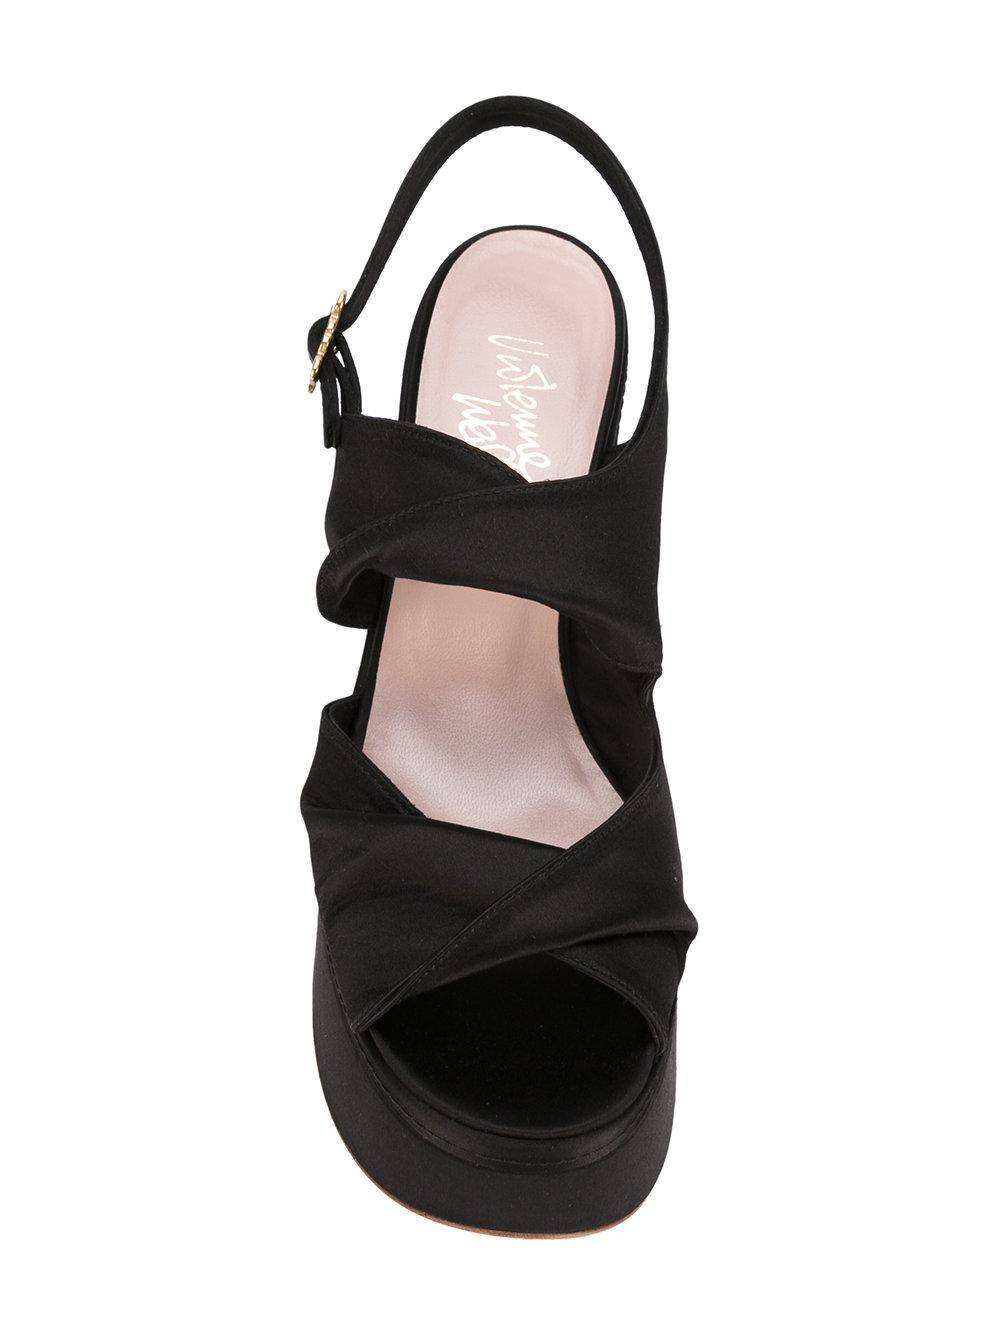 Vivienne Westwood Platform Sandals in Black | Lyst